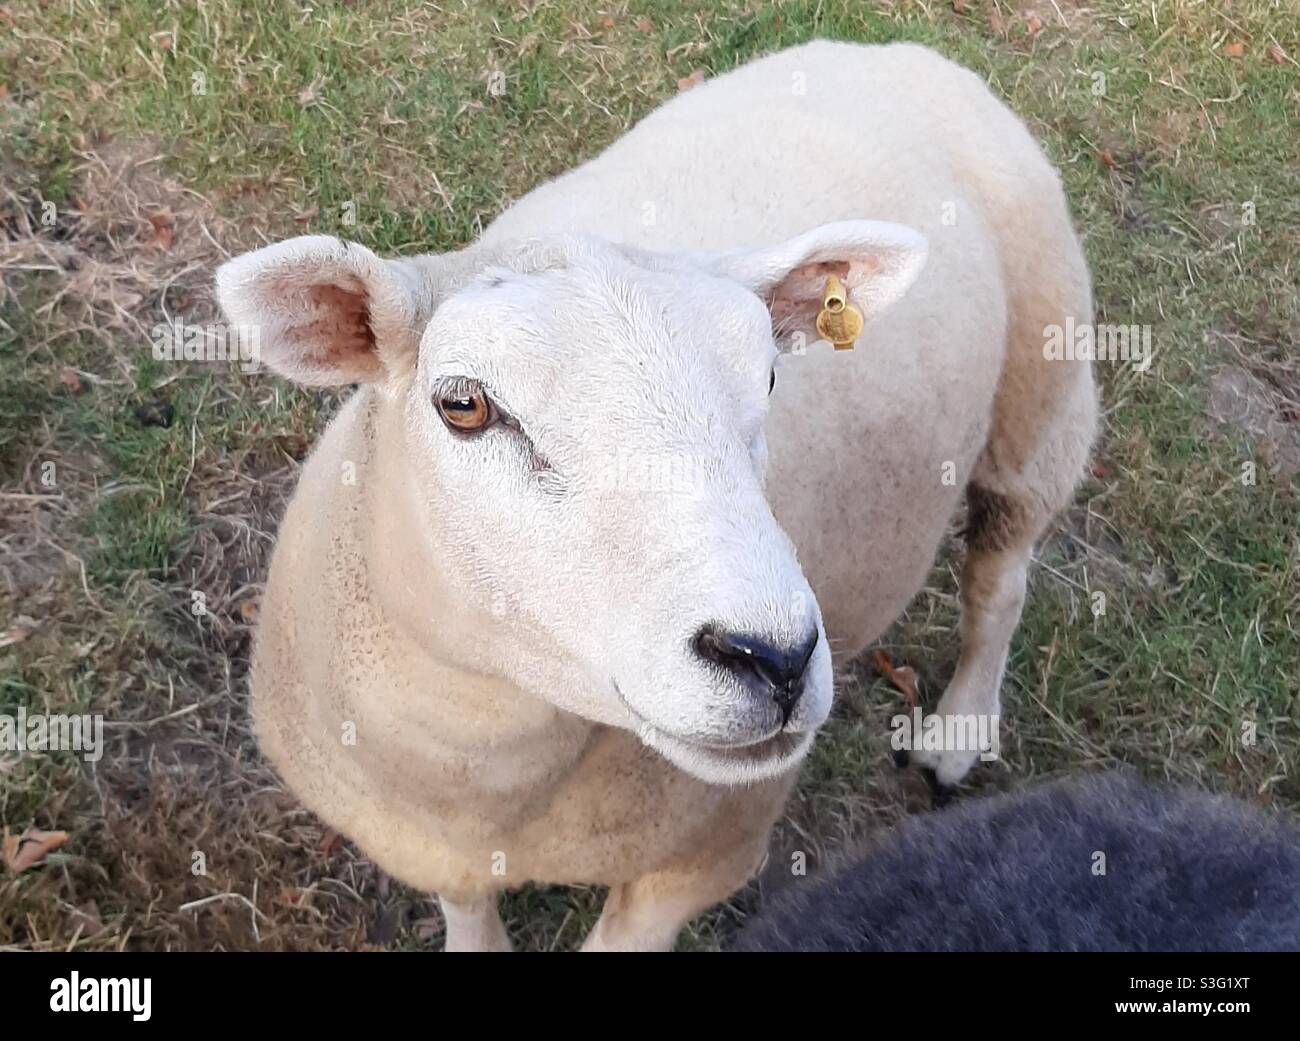 A sheared sheep in a field Stock Photo